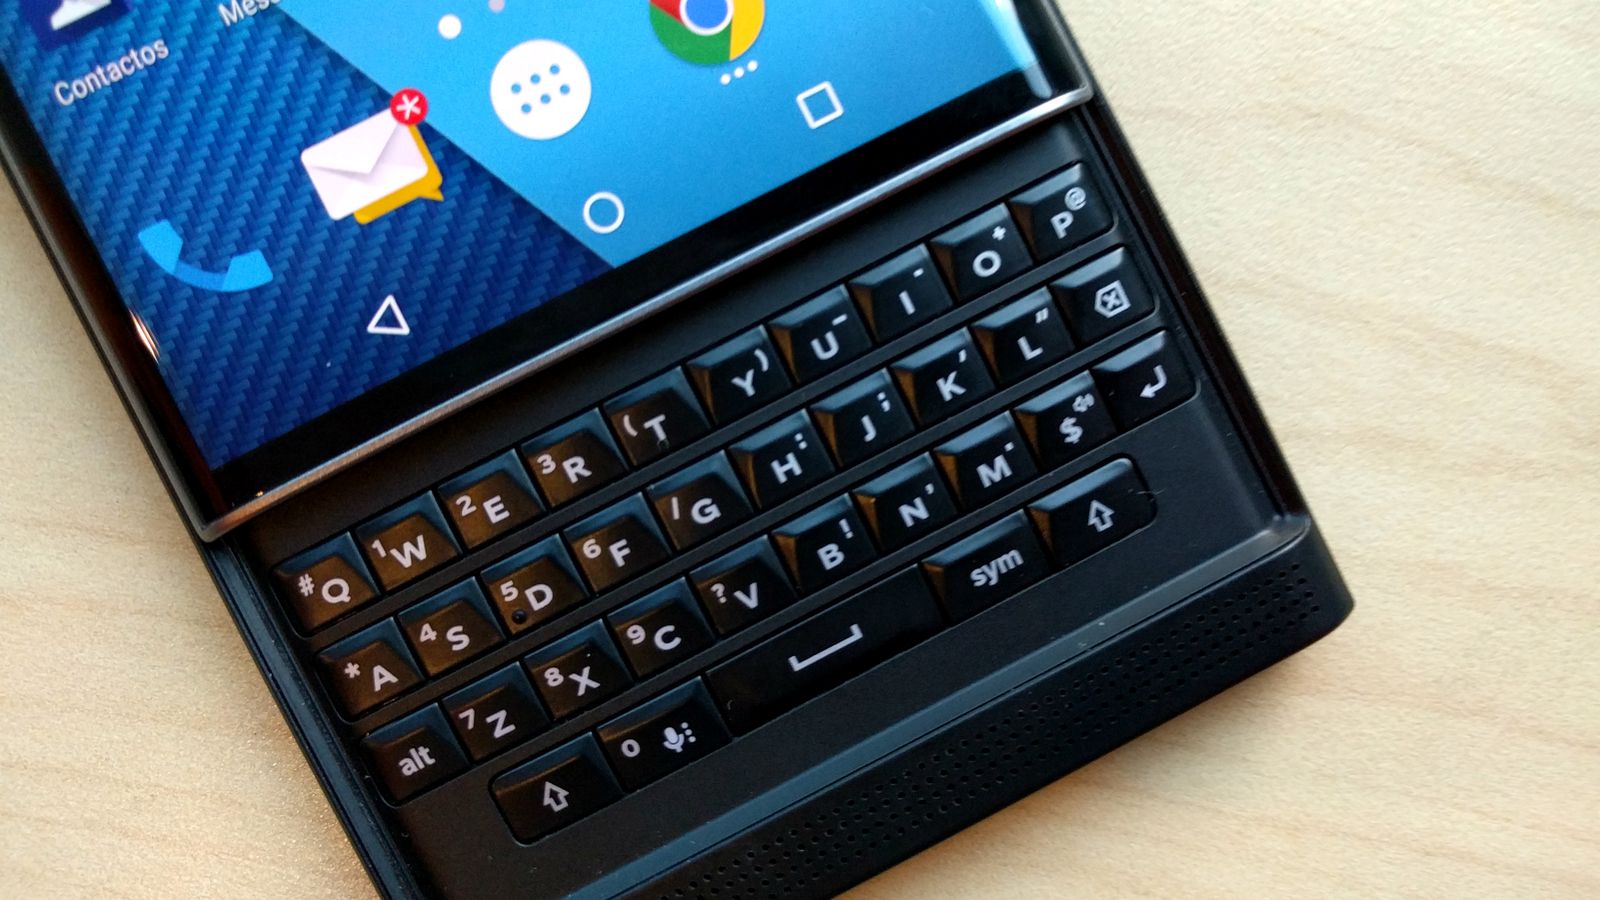 blackberry-smartphone